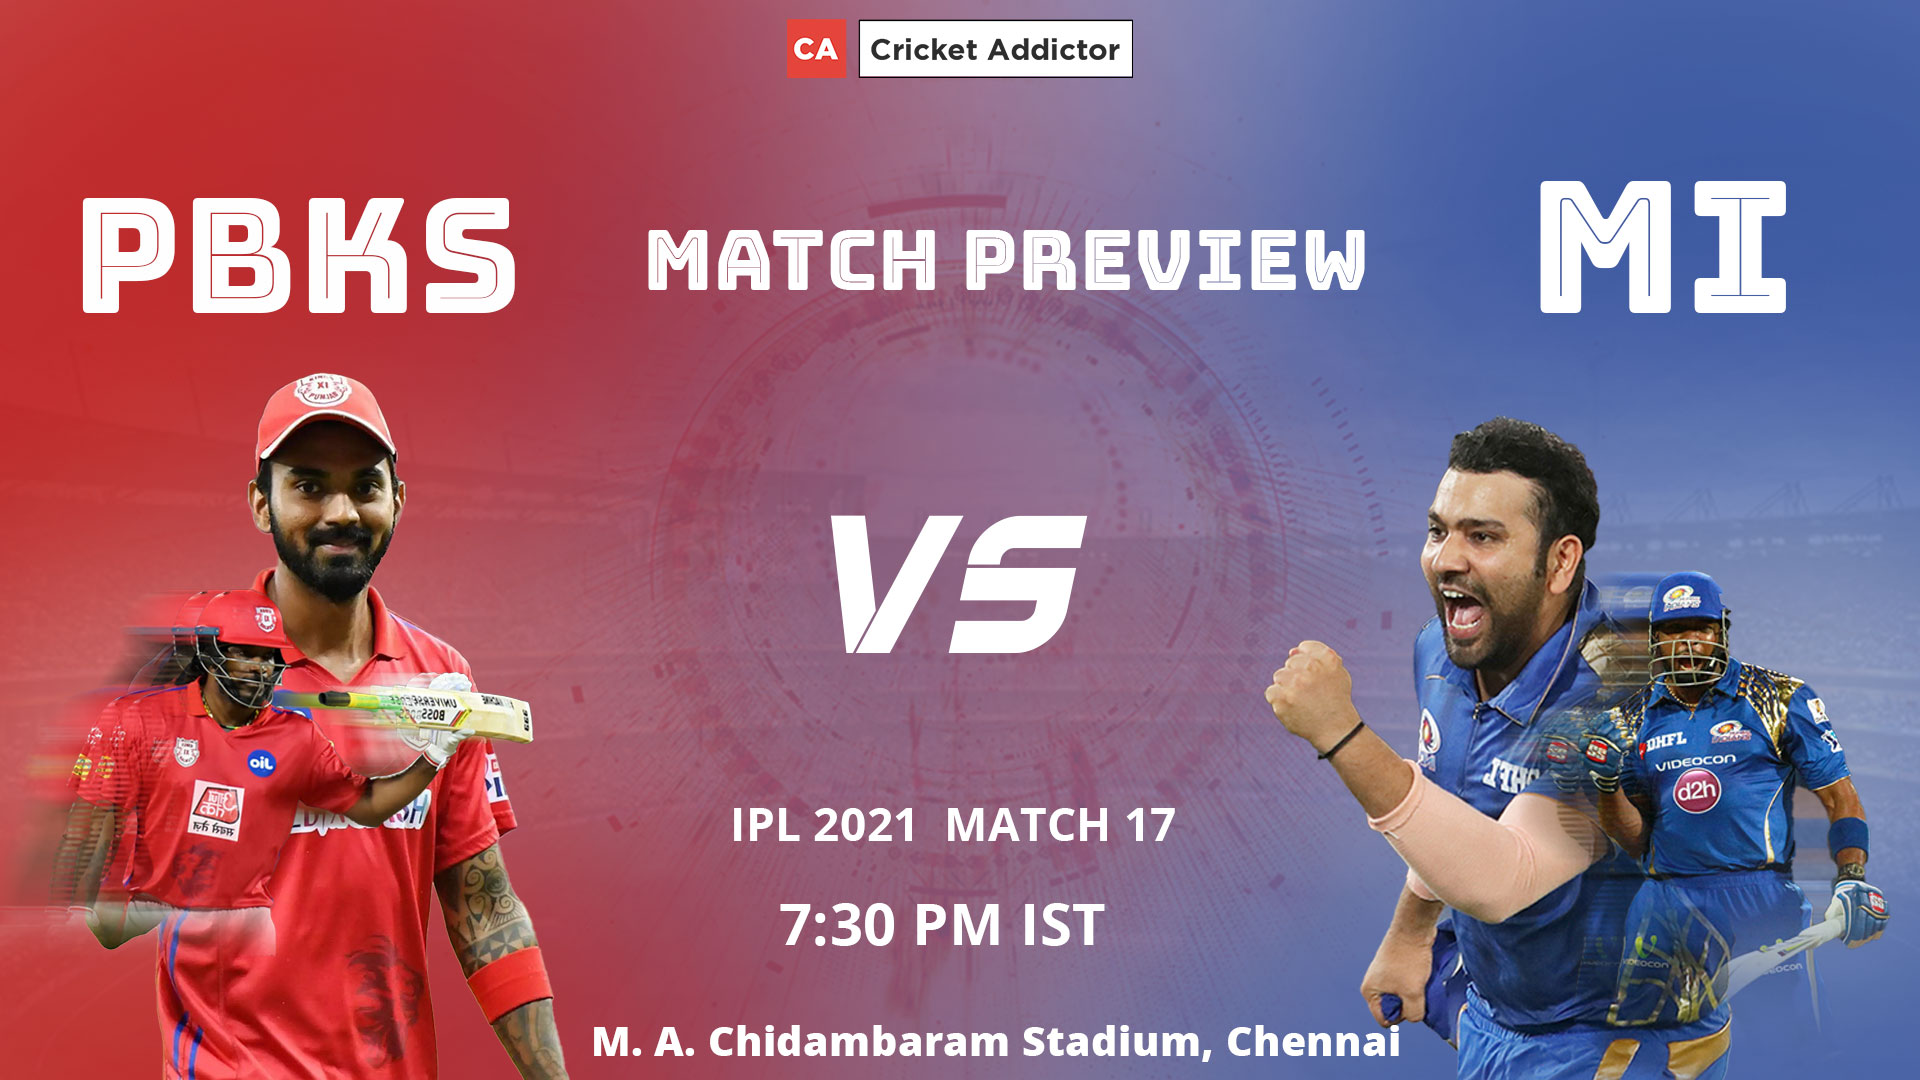 IPL 2021, Punjab Kings, Mumbai Indians, PBKS vs MI, Match Preview